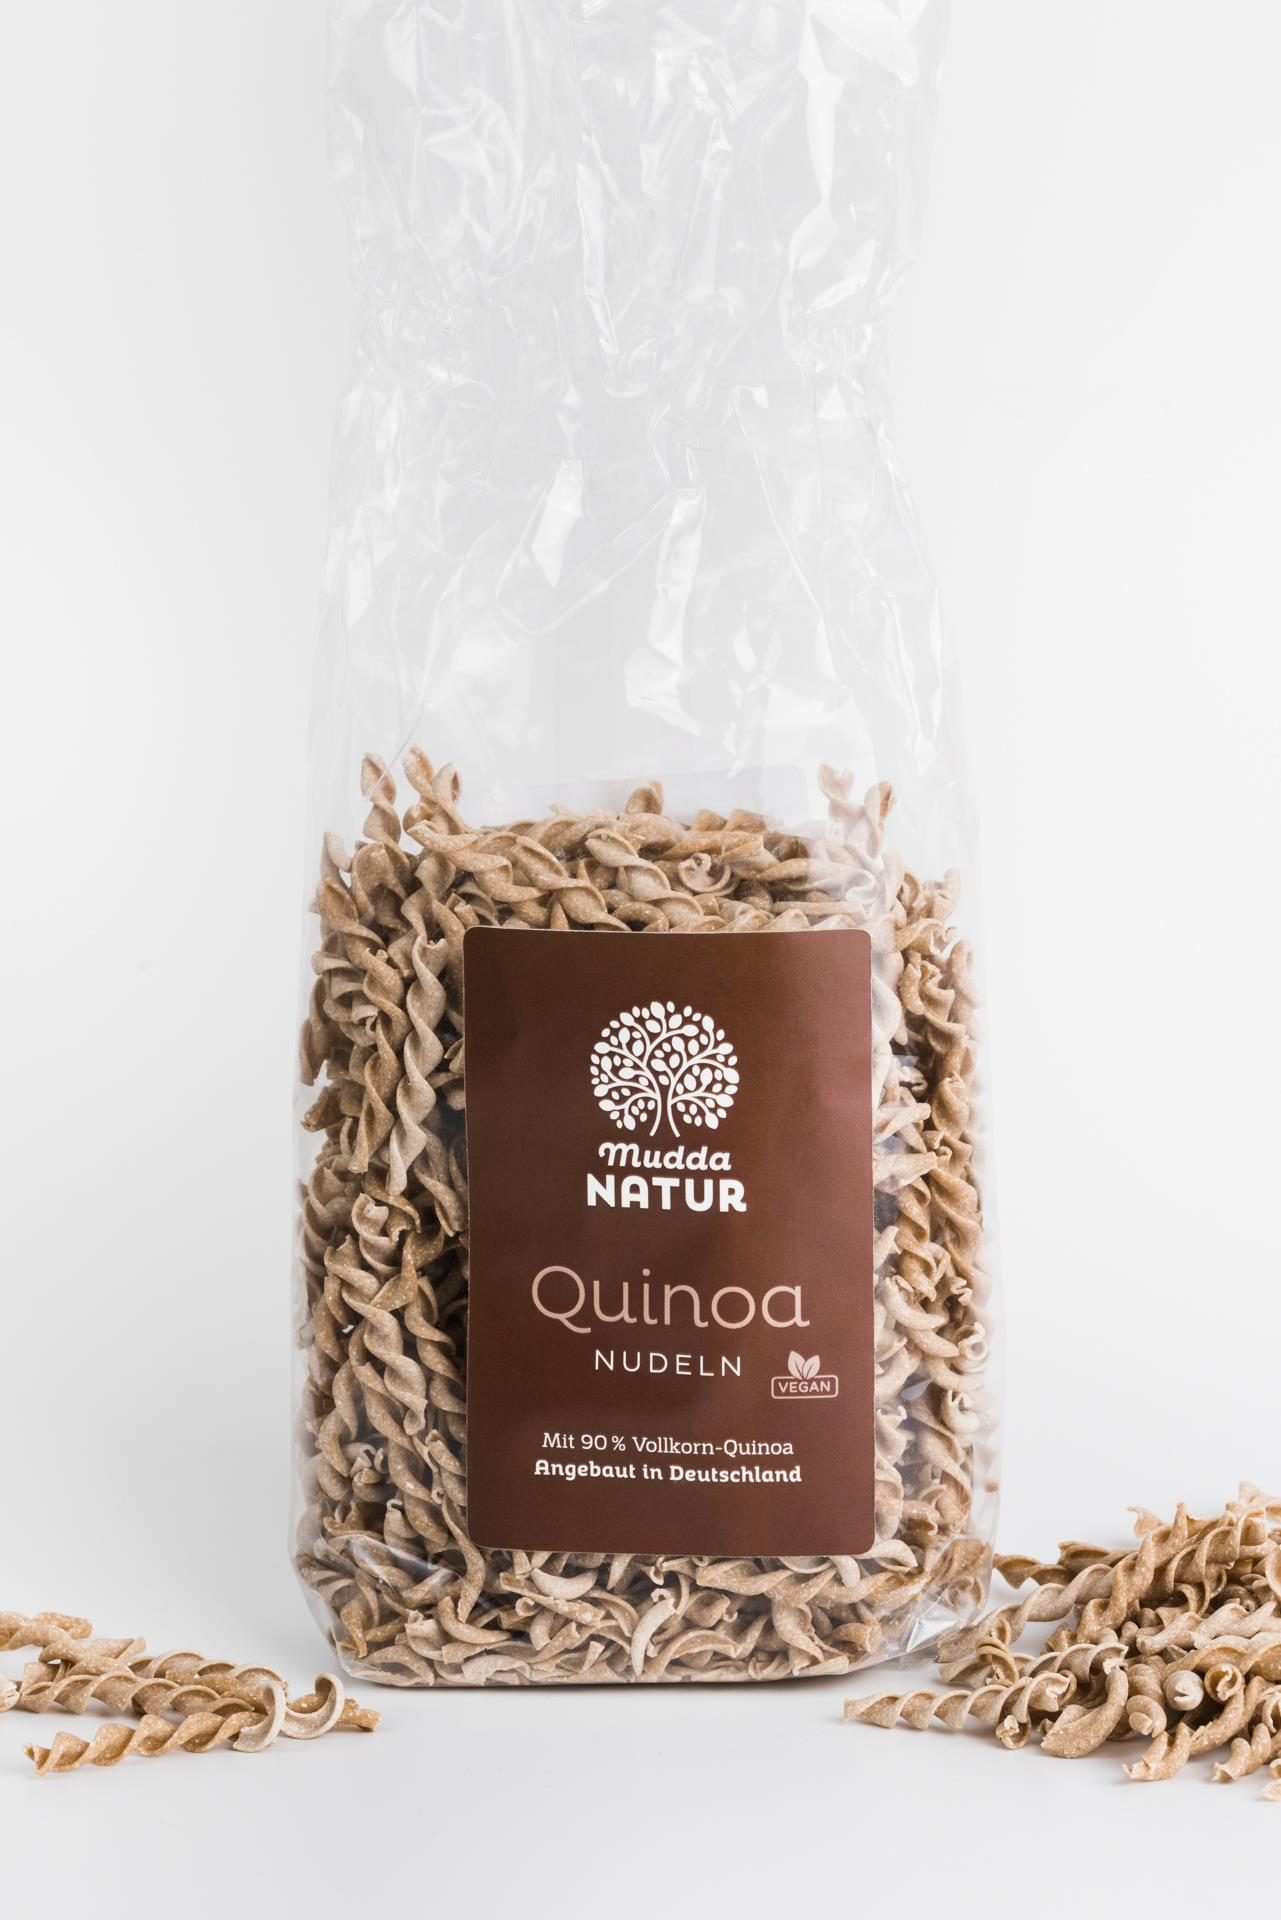 Quinoa Nudeln- Mudda Natur Produktbild 2